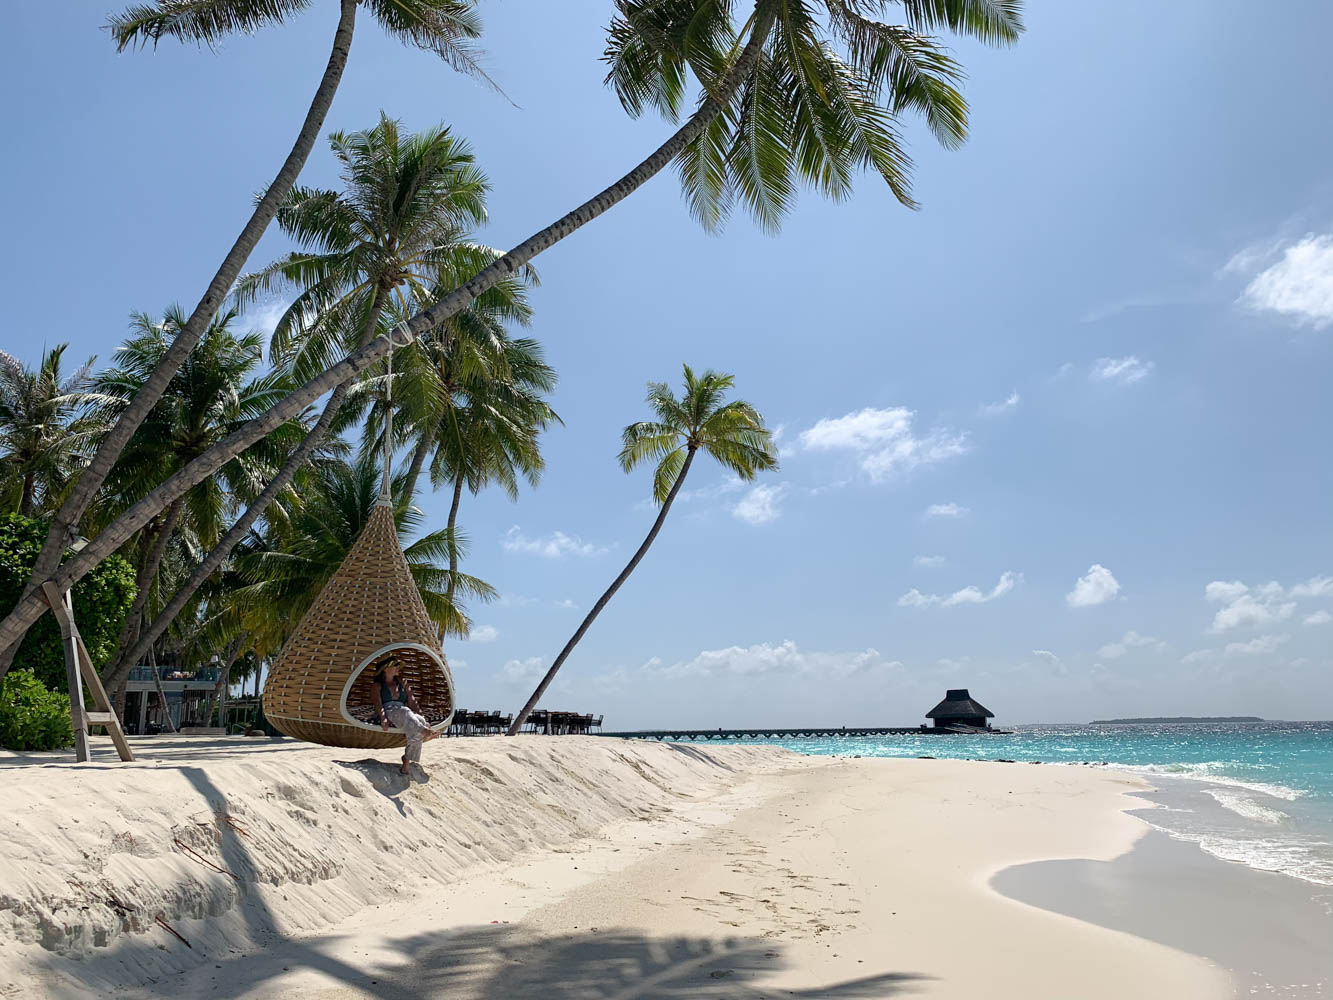 Maldives Resorts Velaa Private Island Jetset Travel